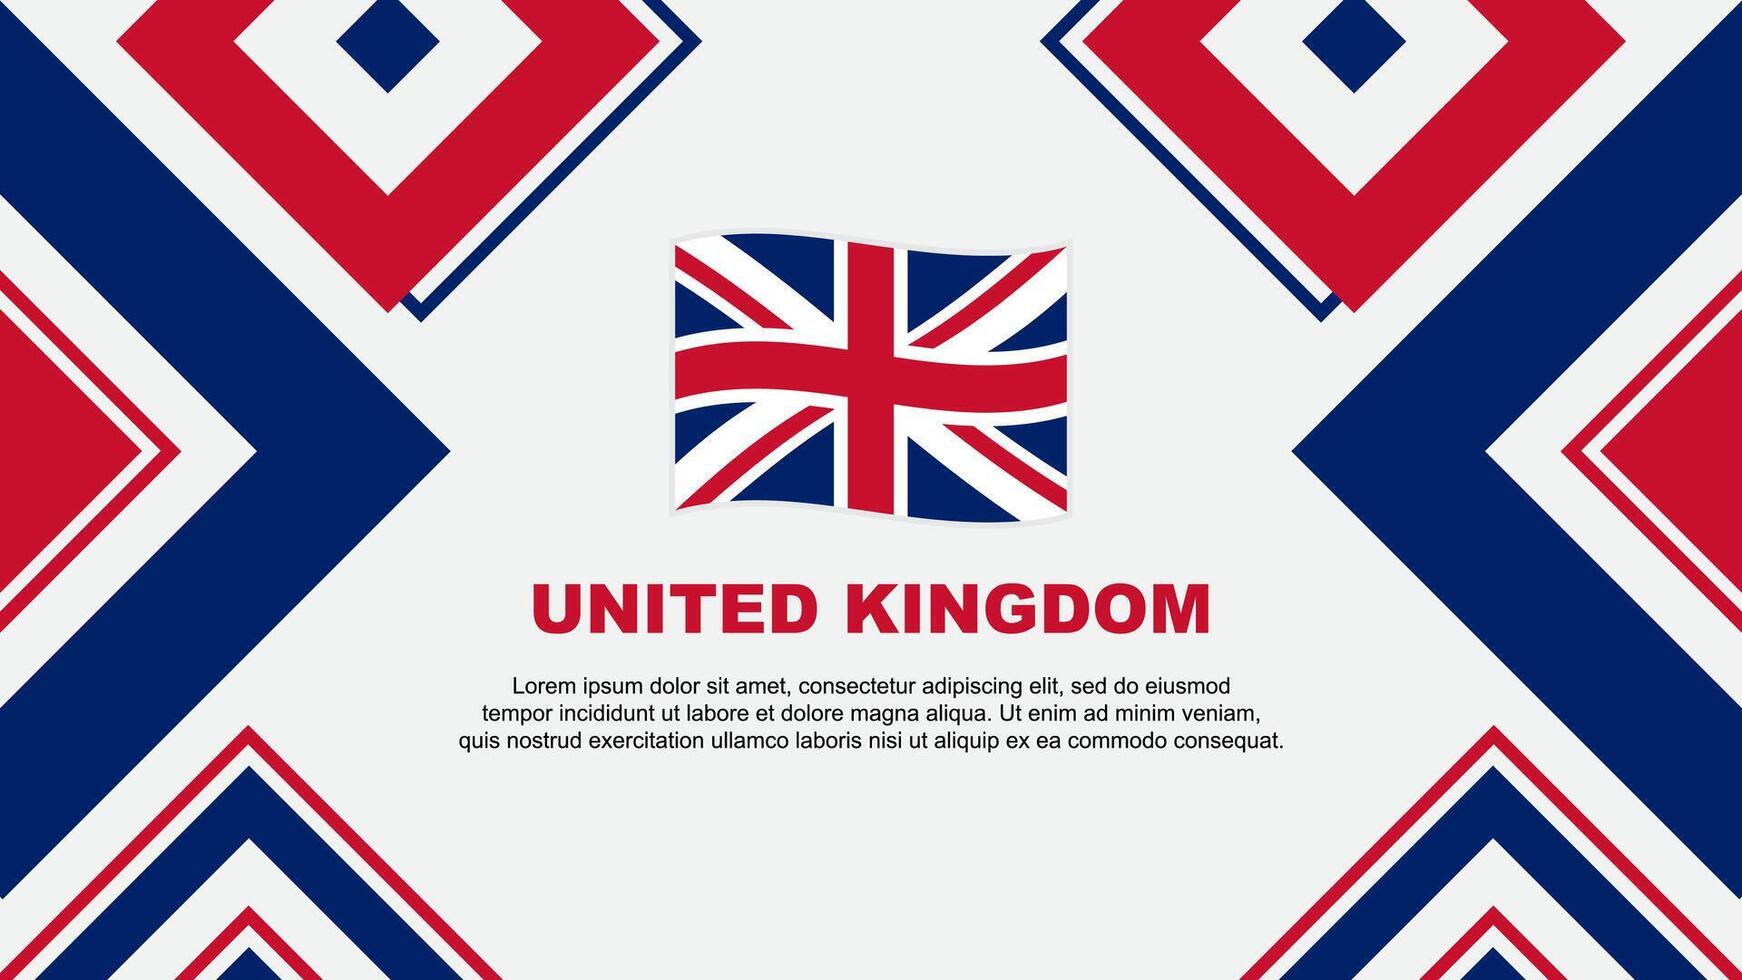 United Kingdom Flag Abstract Background Design Template. United Kingdom Independence Day Banner Wallpaper Vector Illustration. United Kingdom Independence Day